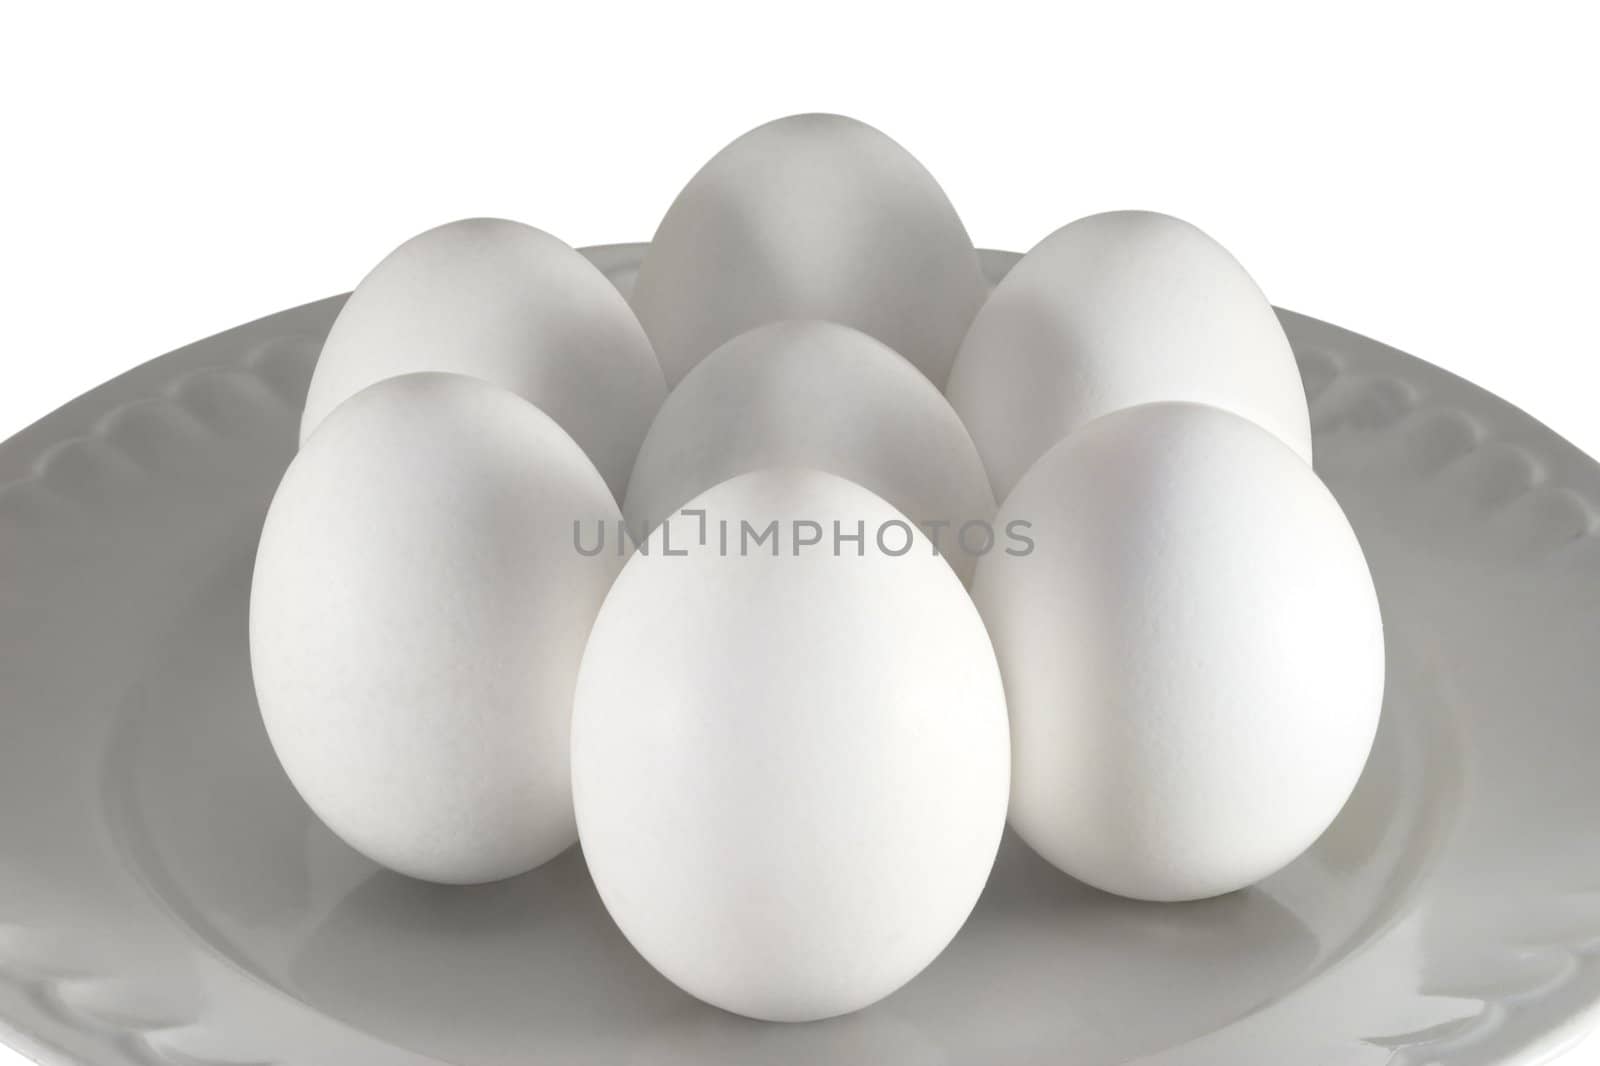 Chicken eggs by Ohotnik